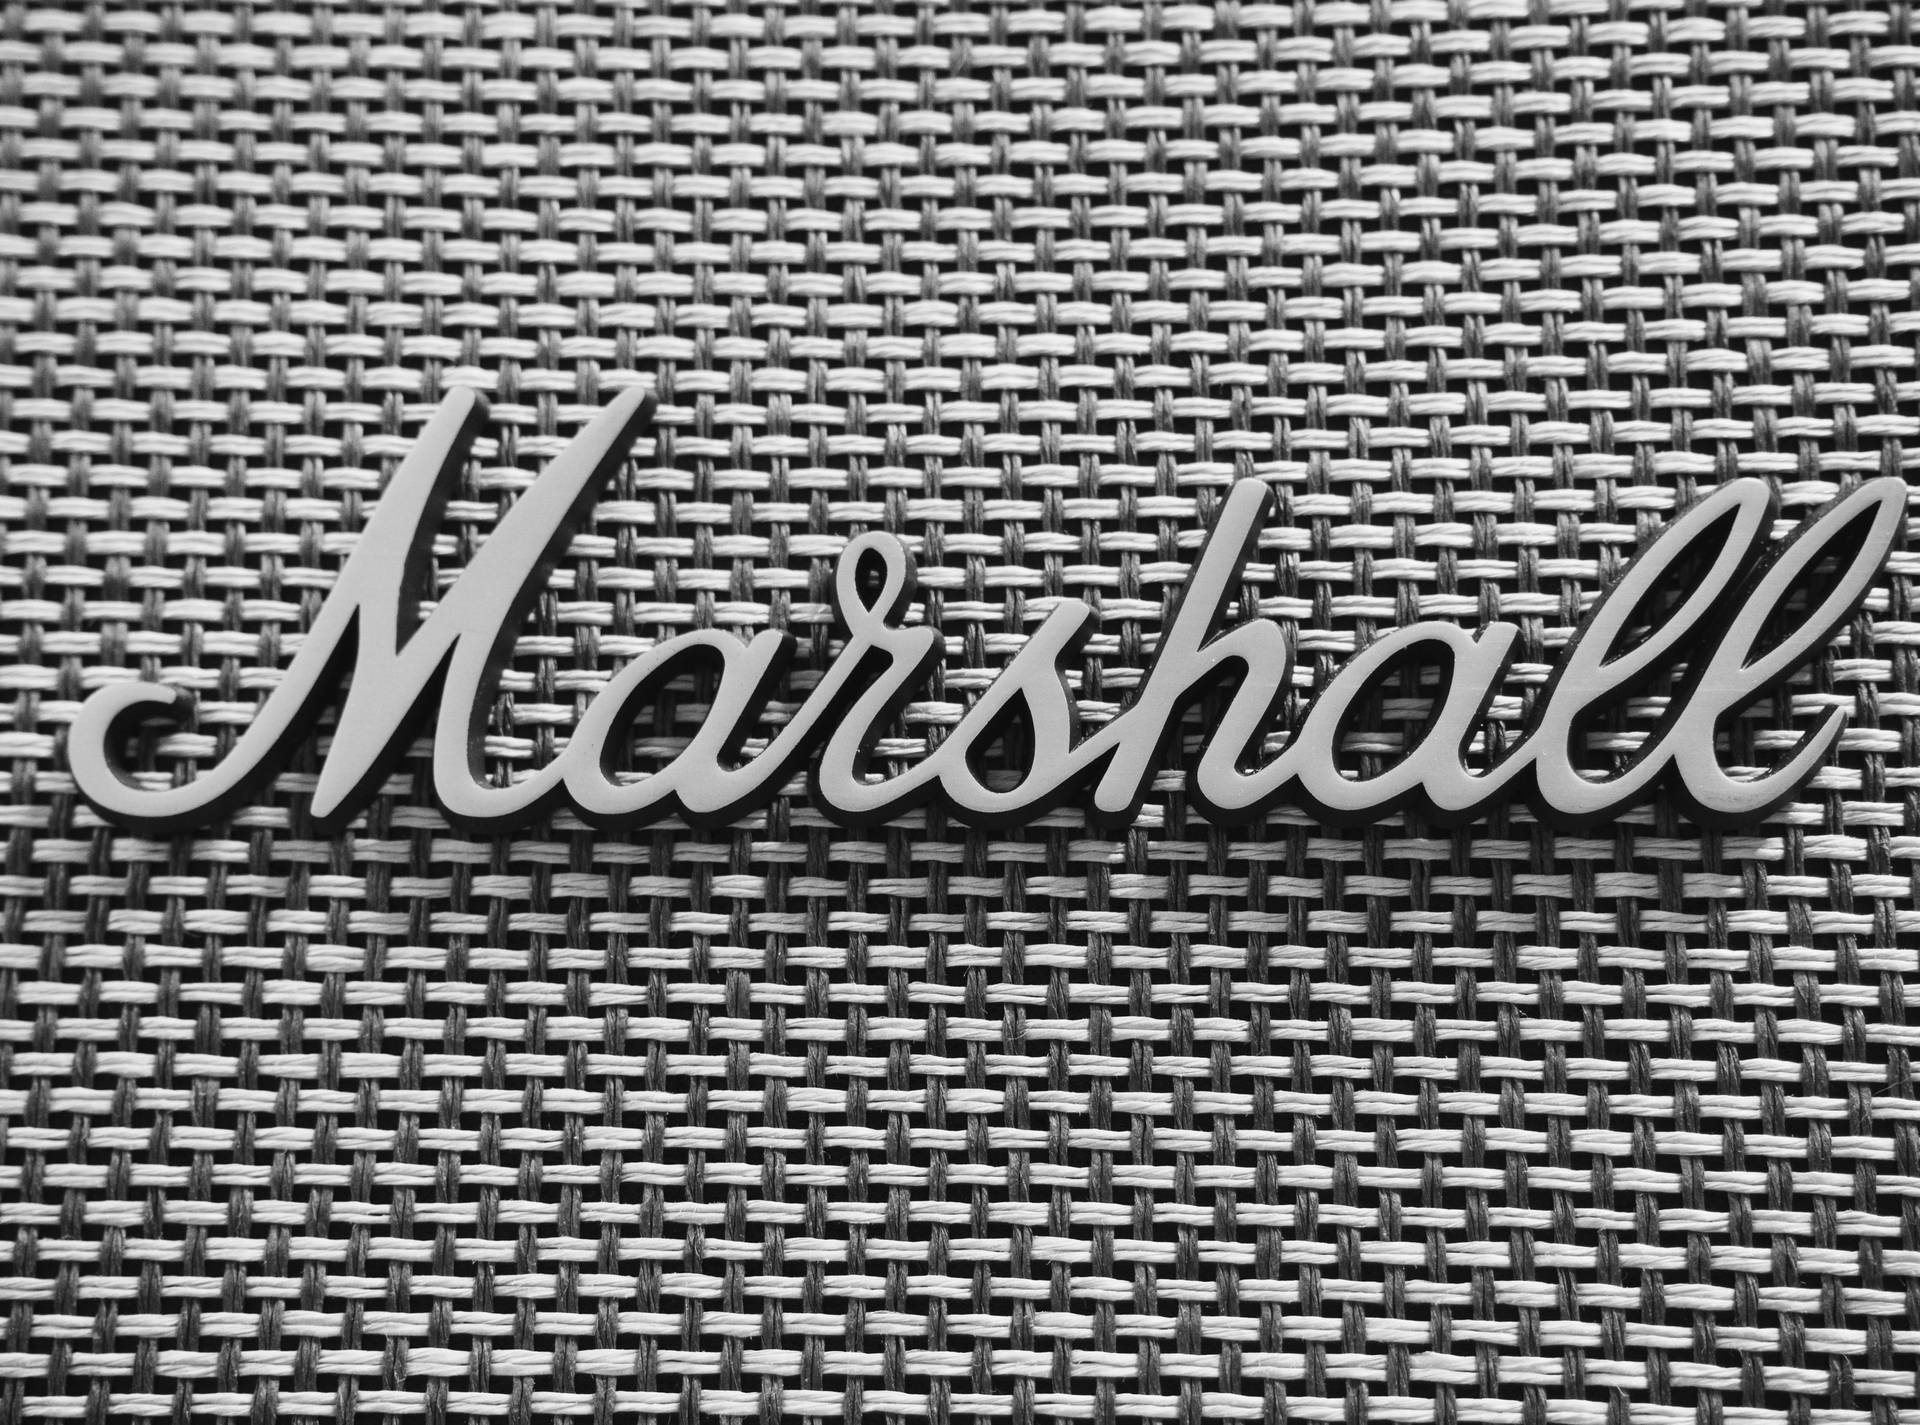 Marshall Cursive Font Wallpaper